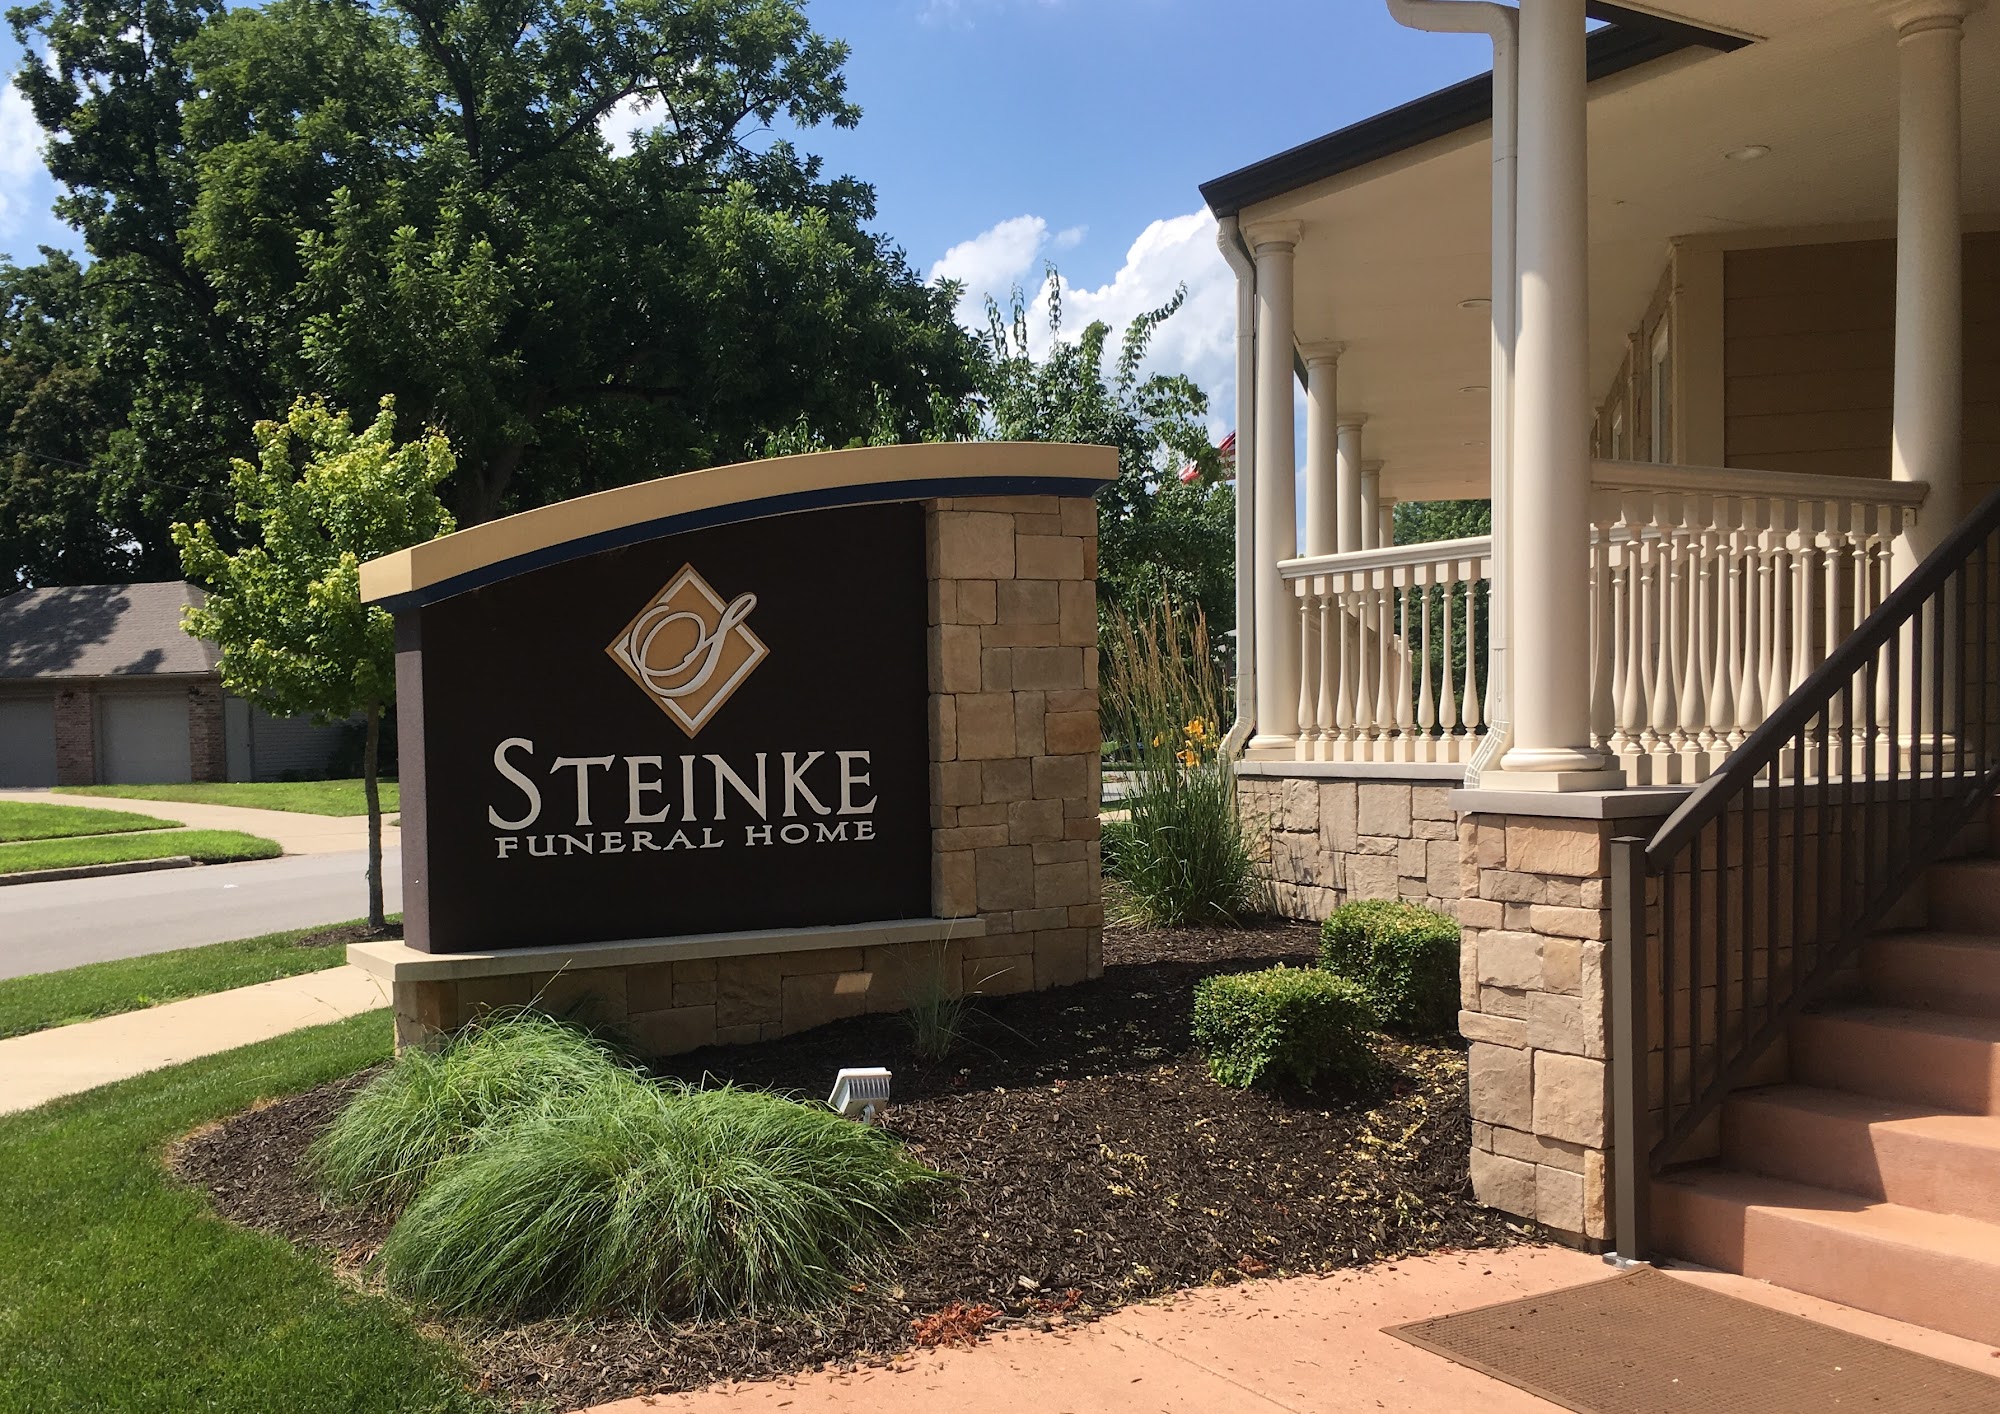 Steinke Funeral Home 403 N Front St, Rensselaer Indiana 47978